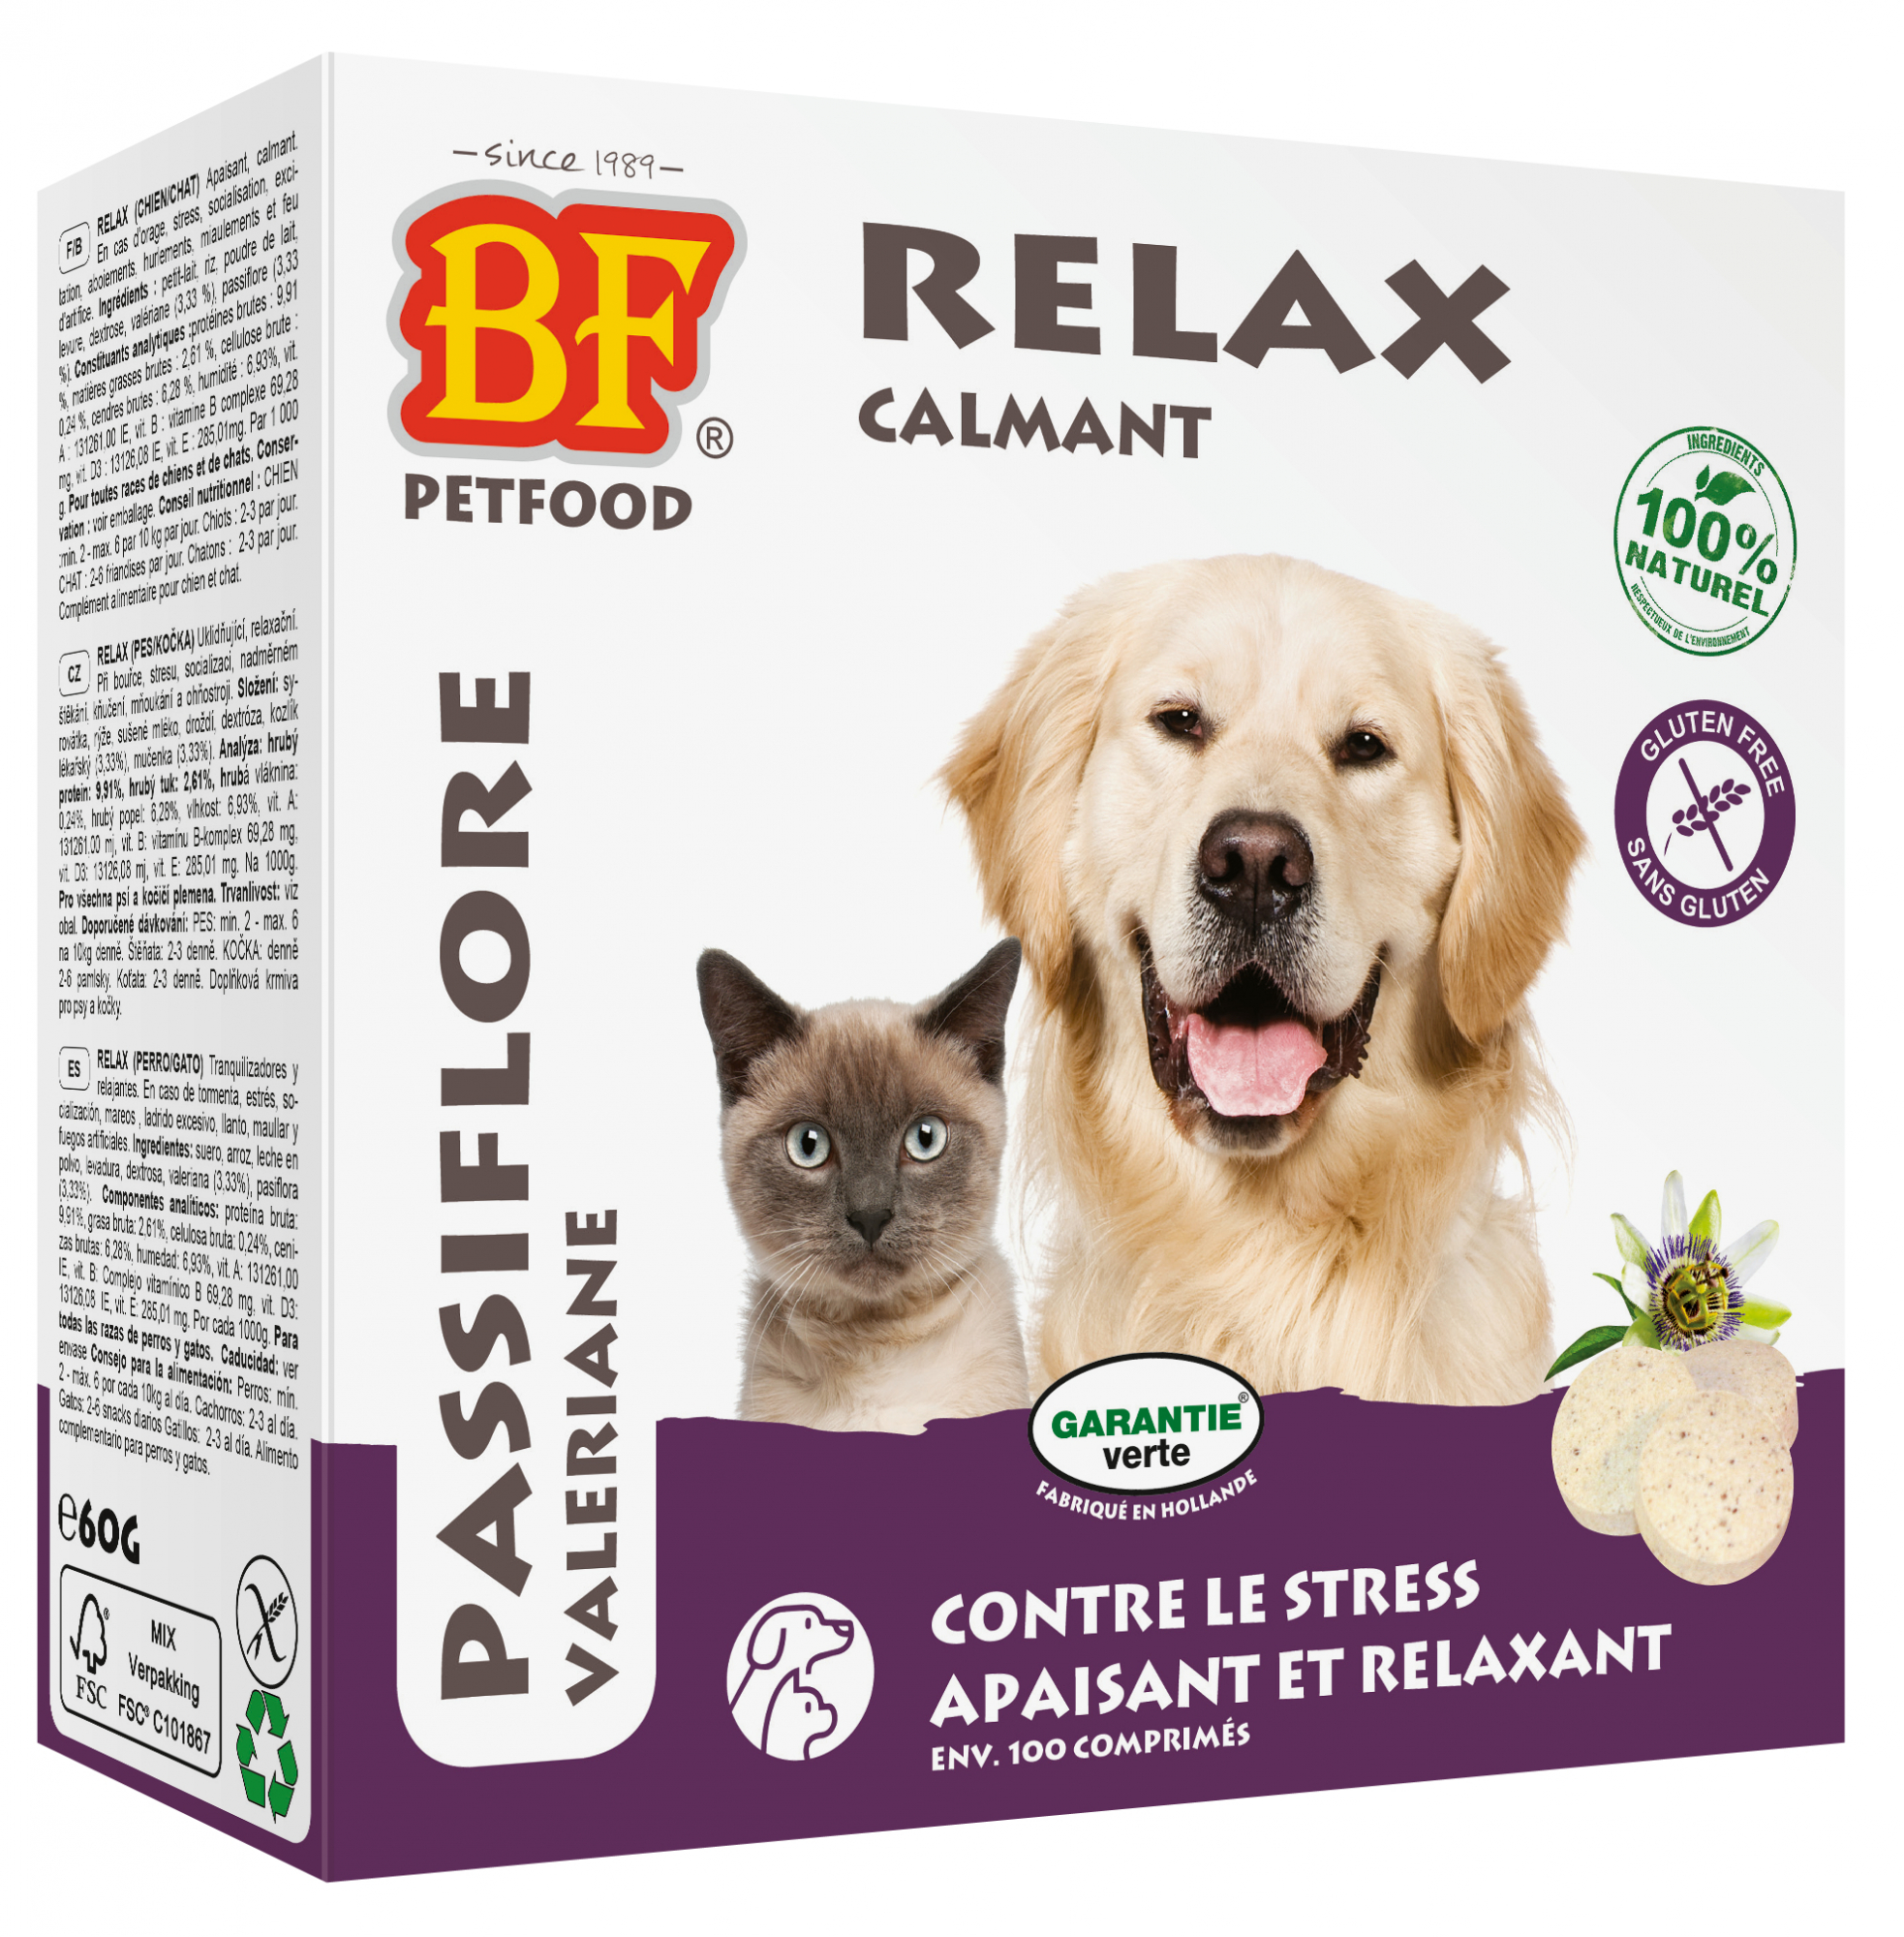 BF PETFOOD - BIOFOOD Comprimidos 100% Naturais Relaxantes para Cães e Gatos